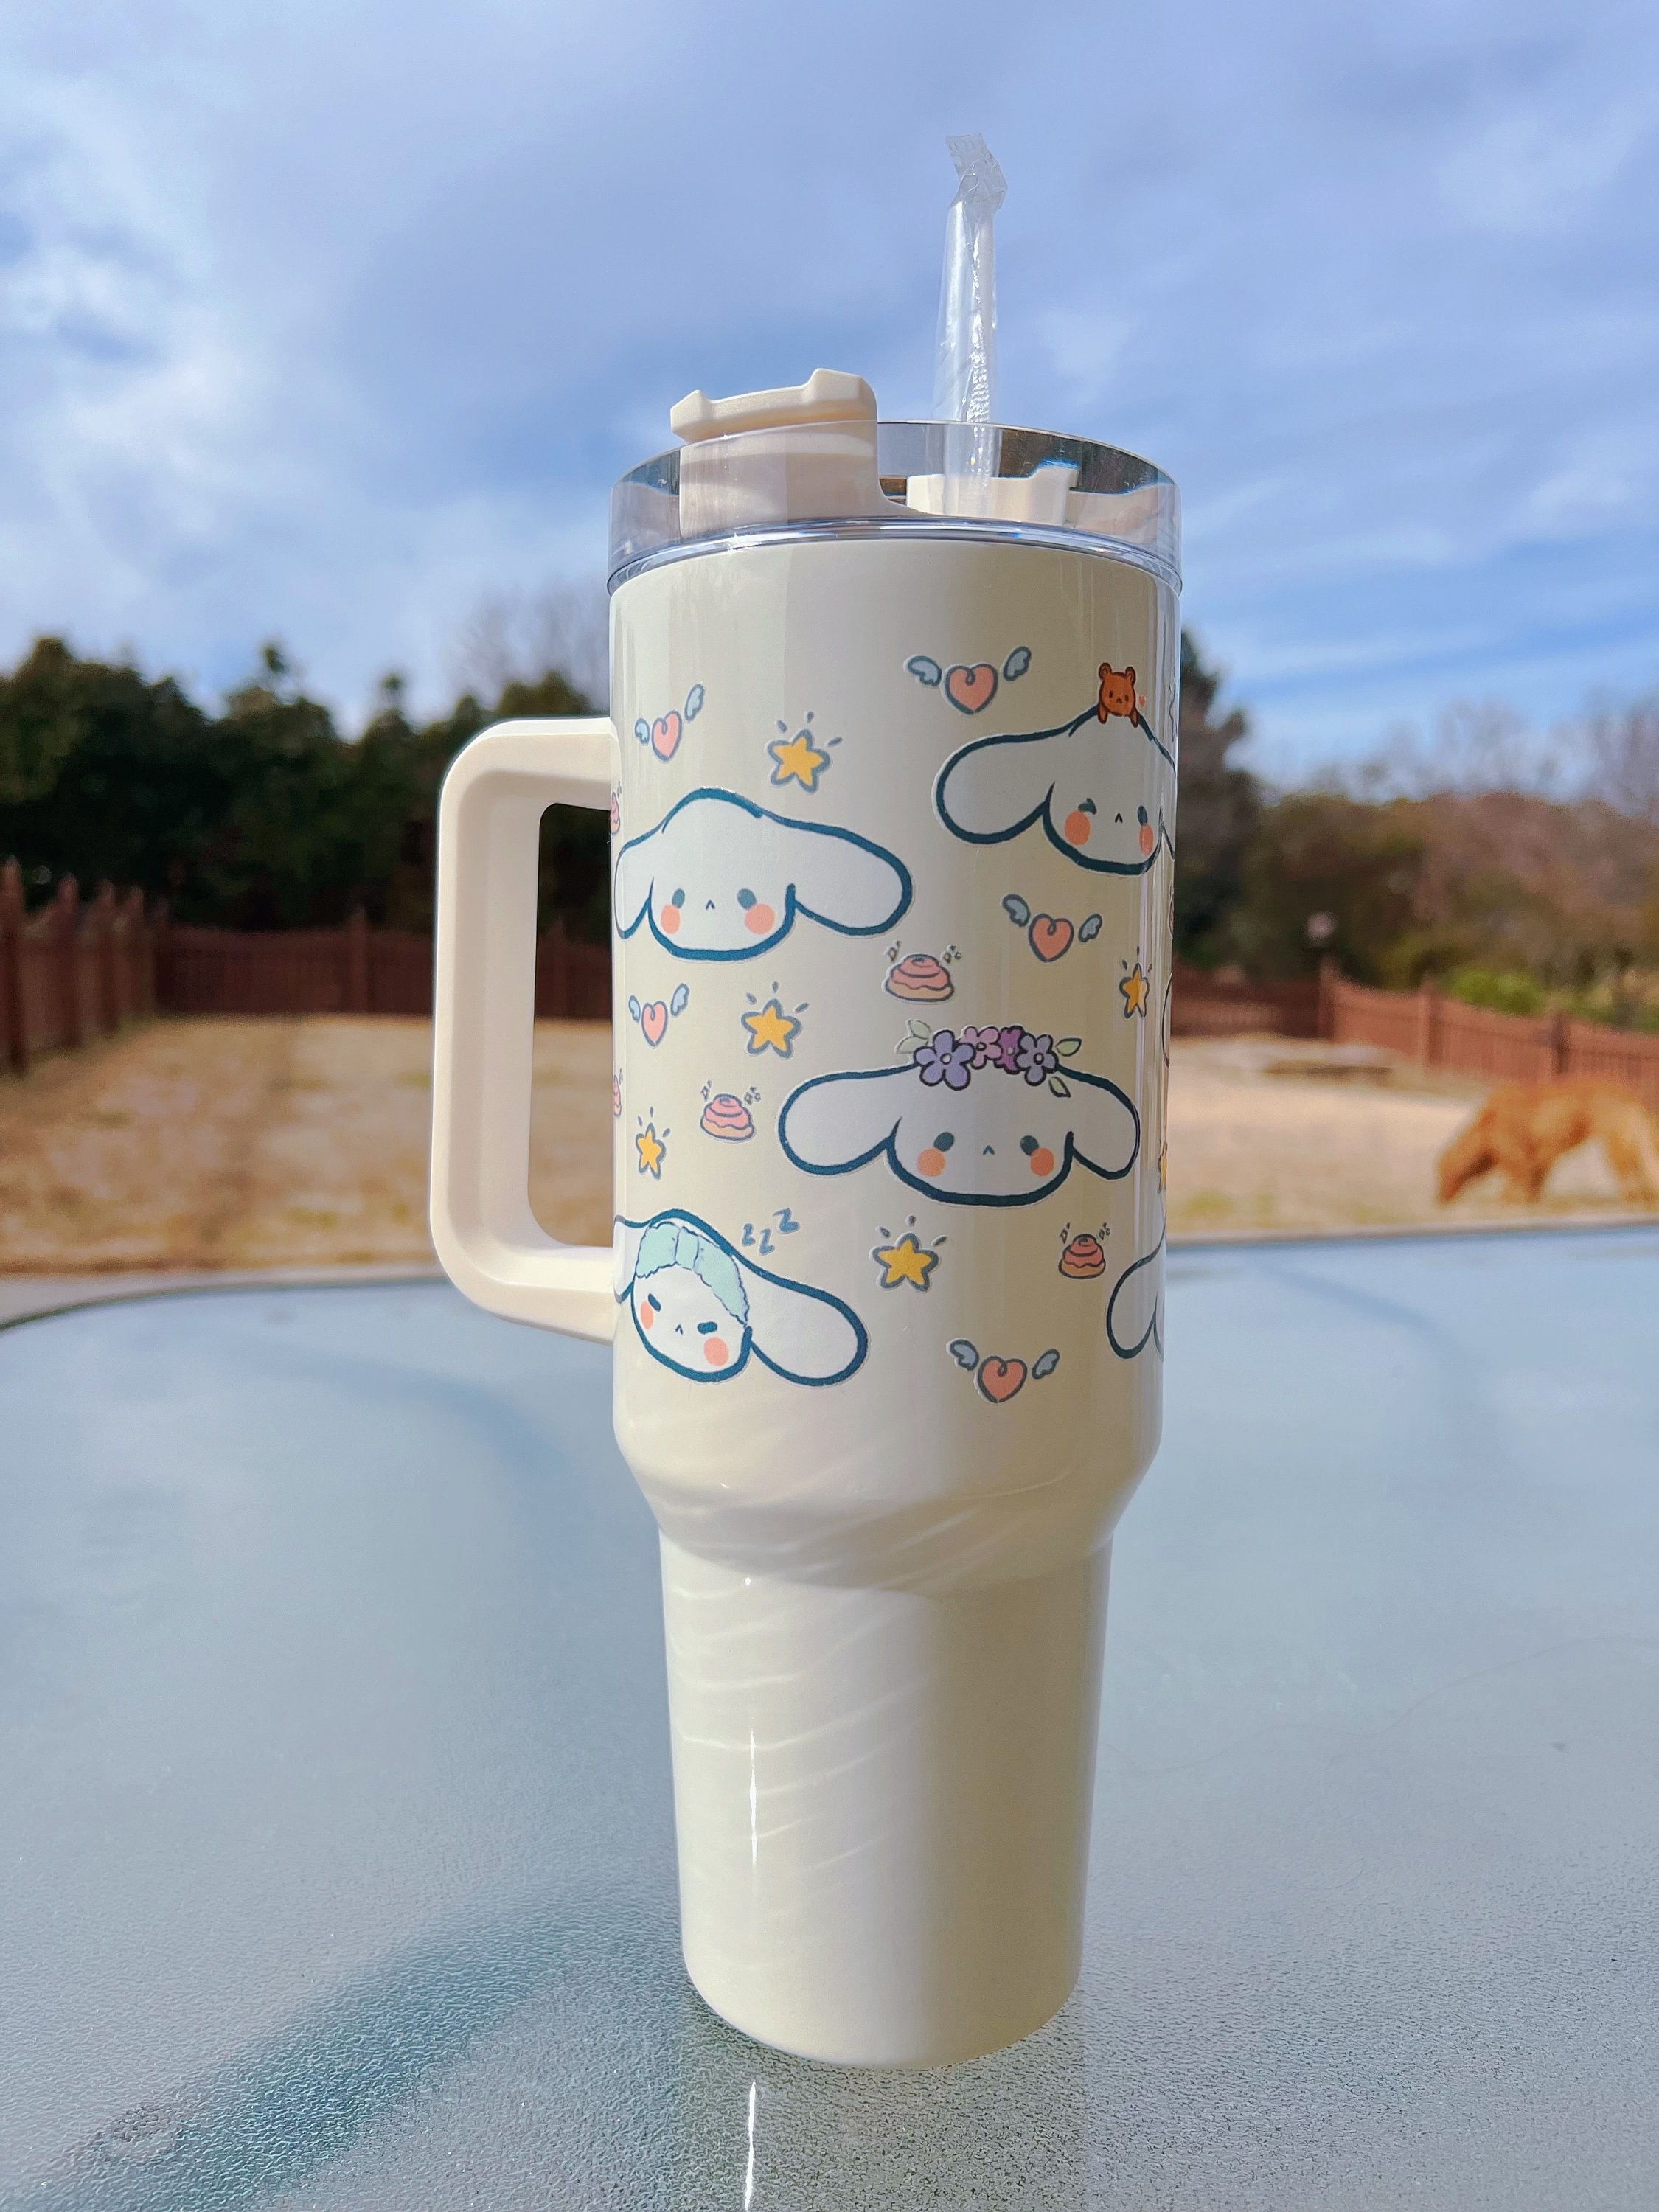 Vacuum Cup Insulated Coffee Bottle, 320ml Mini Vacuum Mug Cute Thermos, Stainless Steel Mini Thermos Travel Mug, Magic Rabbit Tea Milk Bottle, for